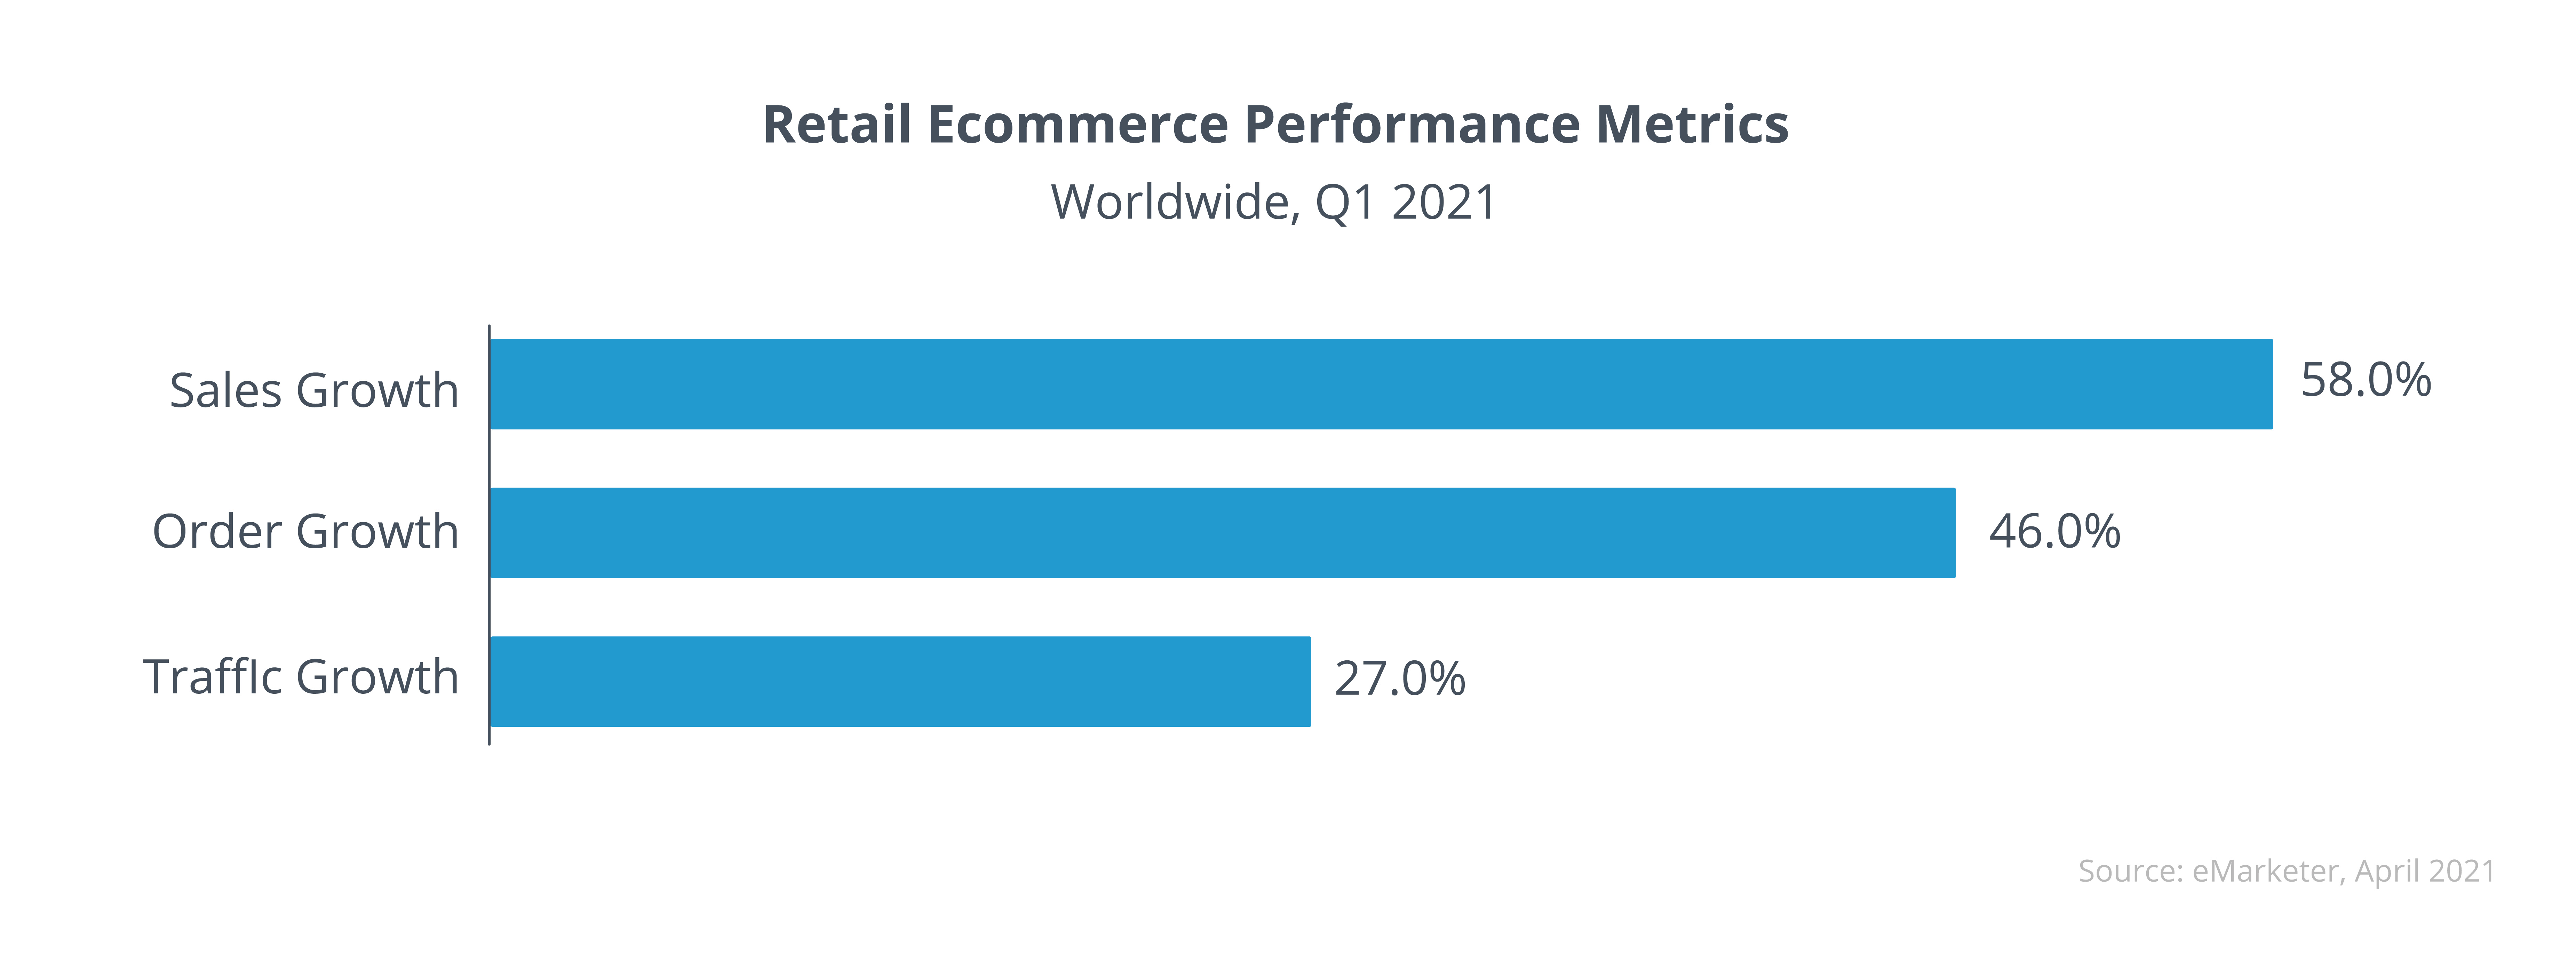 Retail Ecommerce Performance Metrics(Worldwide, Q1 2021)